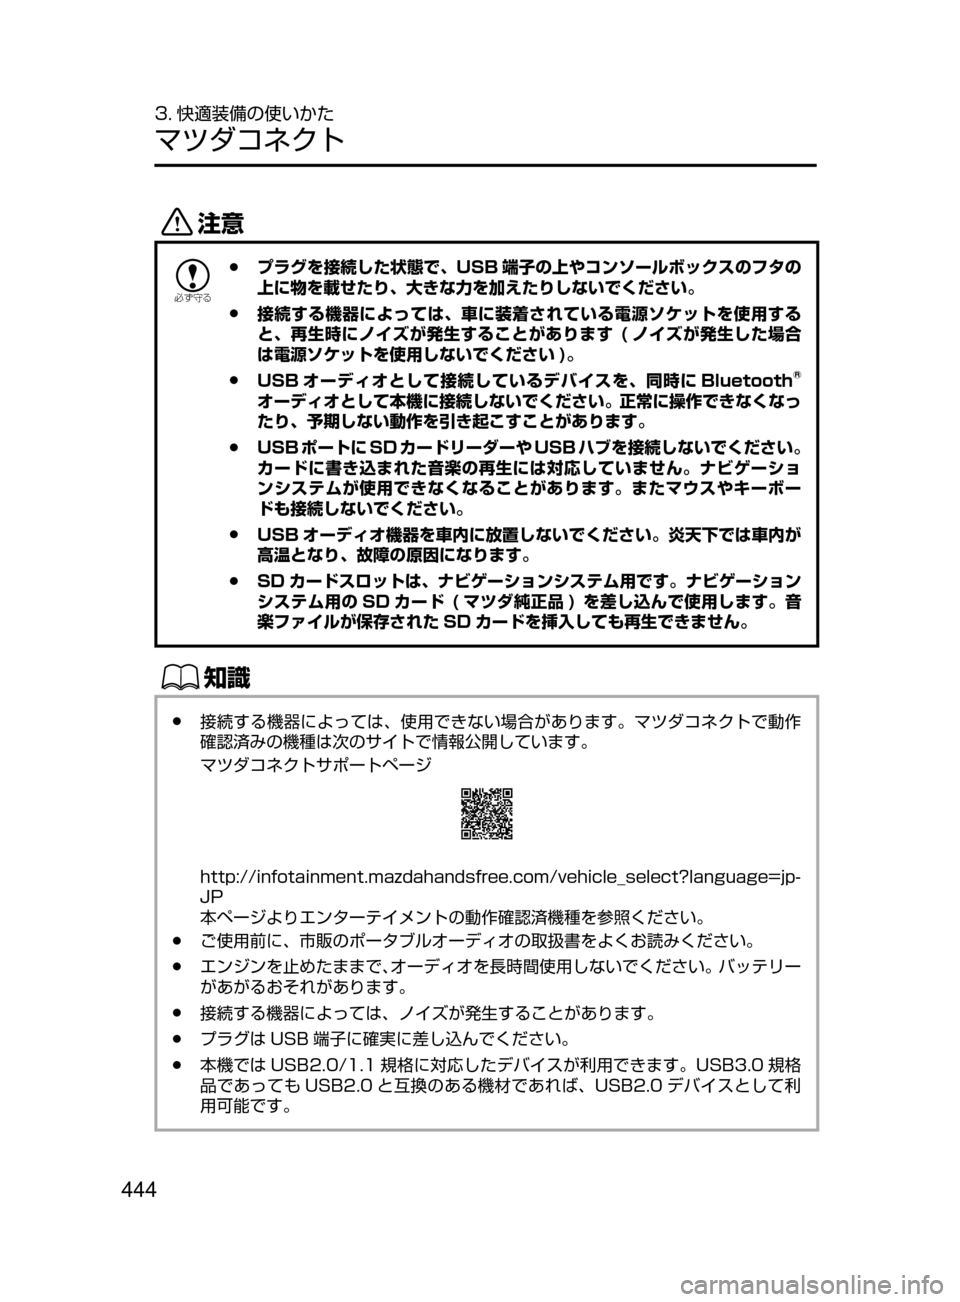 MAZDA MODEL CX-5 2017  取扱説明書 (in Japanese) 444
3. 快適装備の使いかた
マツダコネクト
«™

žc	”
 ●プラグを接続した状態で､ USB 端子の上やコンソールボックスのフタの
上に物を載せた